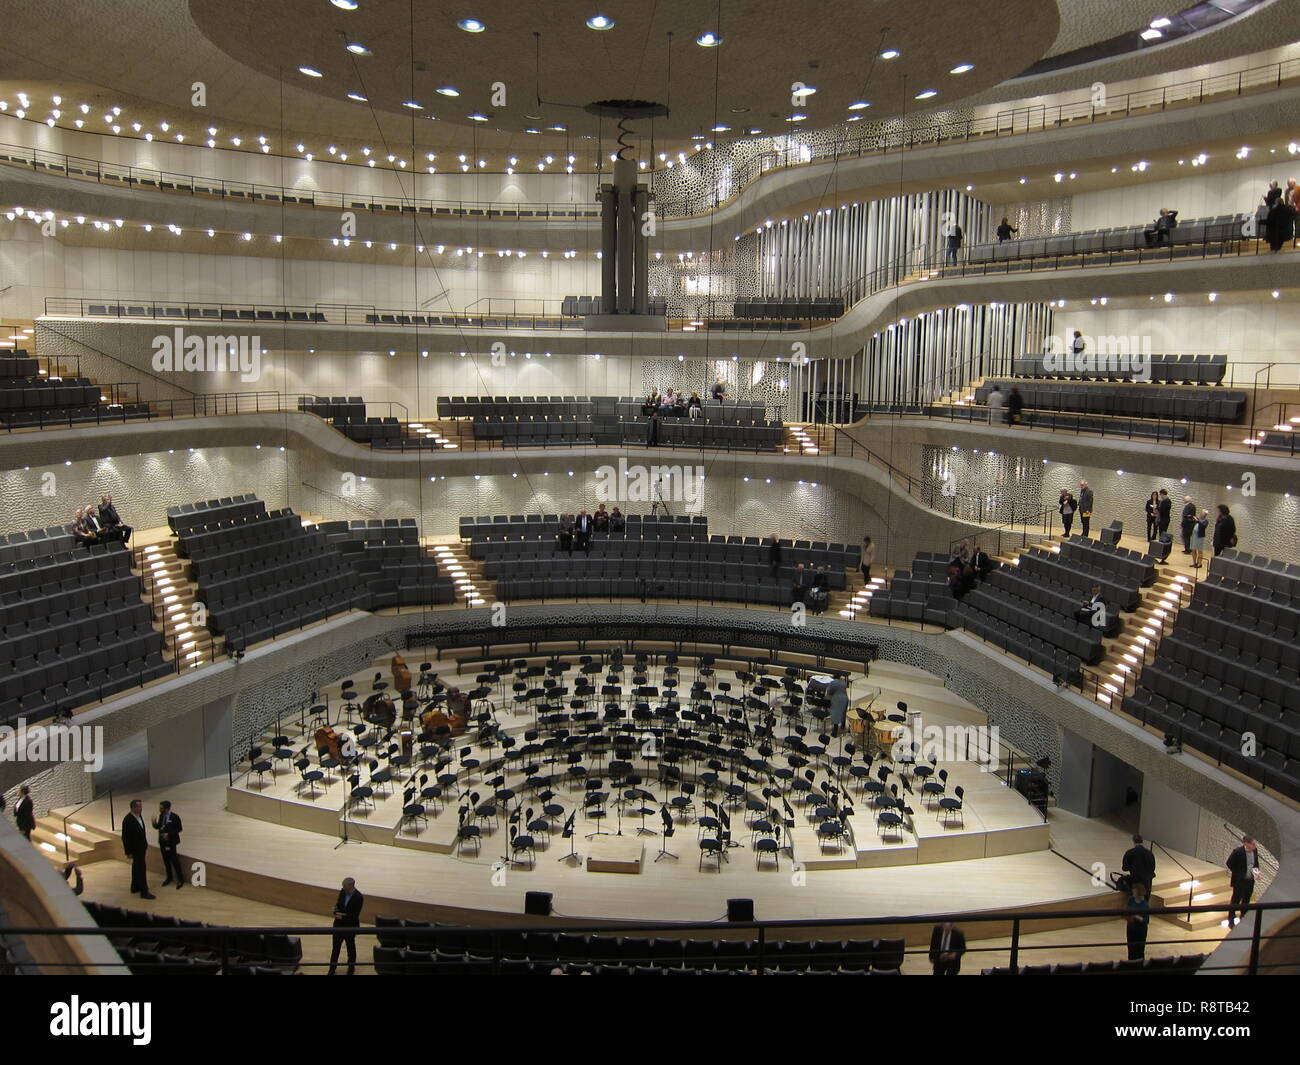 Elbphilharmonie Großer Saal Eröffnung Stock Photo